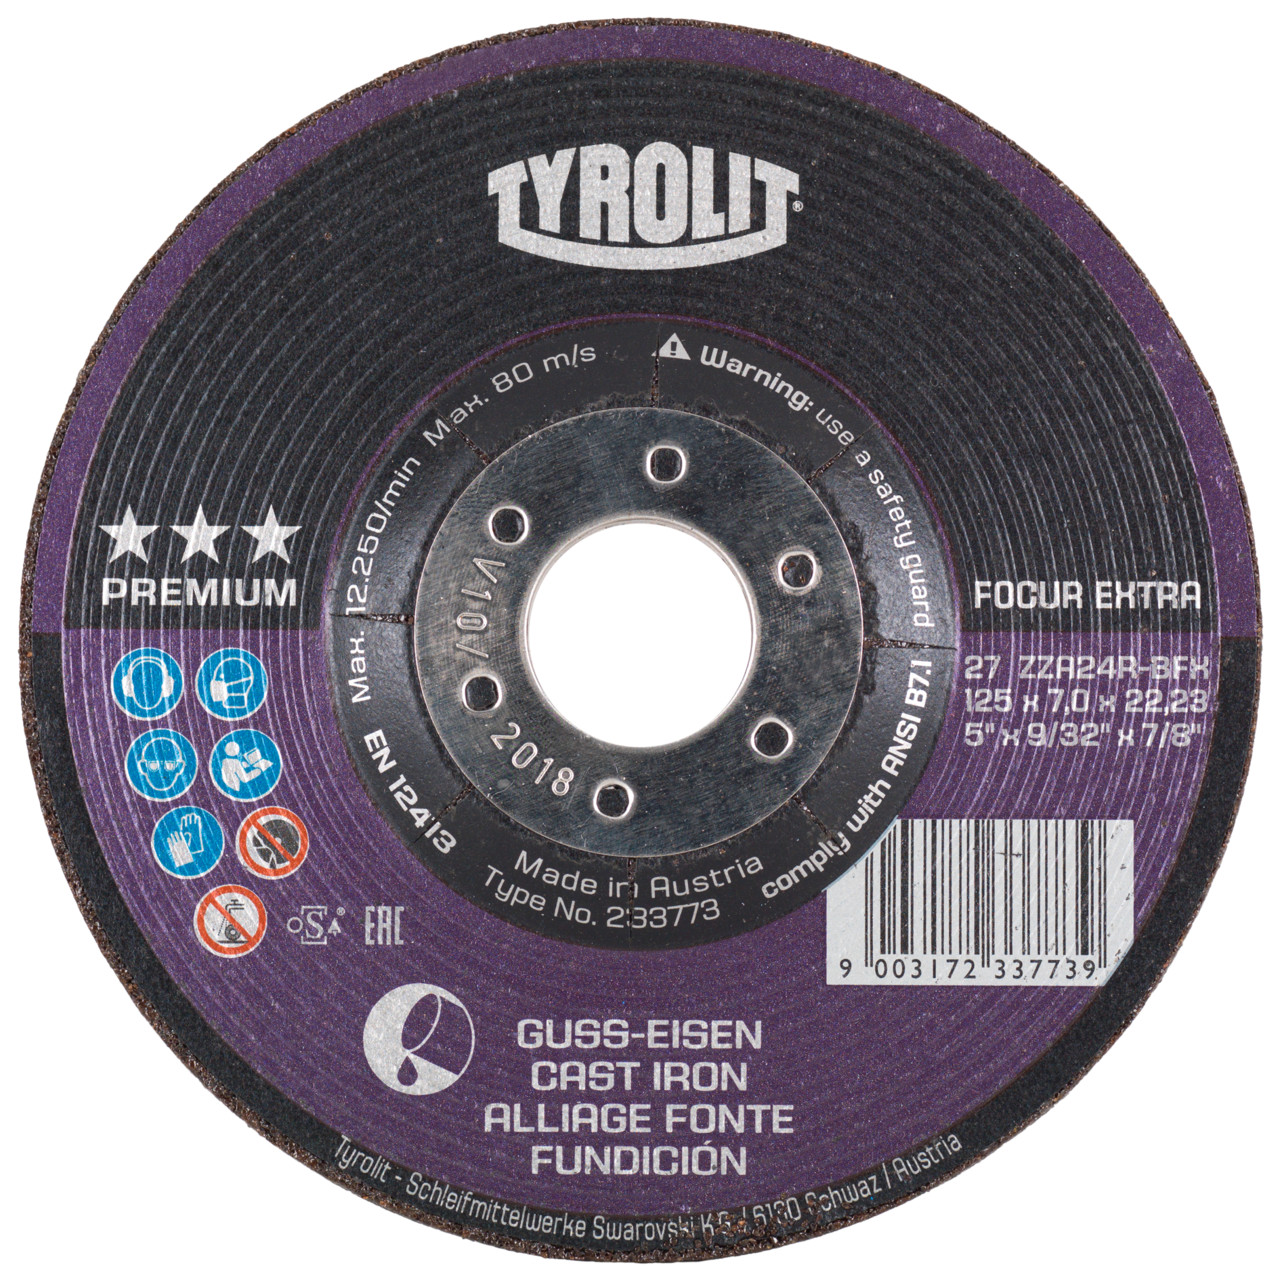 Tyrolit Roughing disc DxUxH 230x4x22.23 FOCUR Extra for cast iron, shape: 27 - offset version, Art. 233777